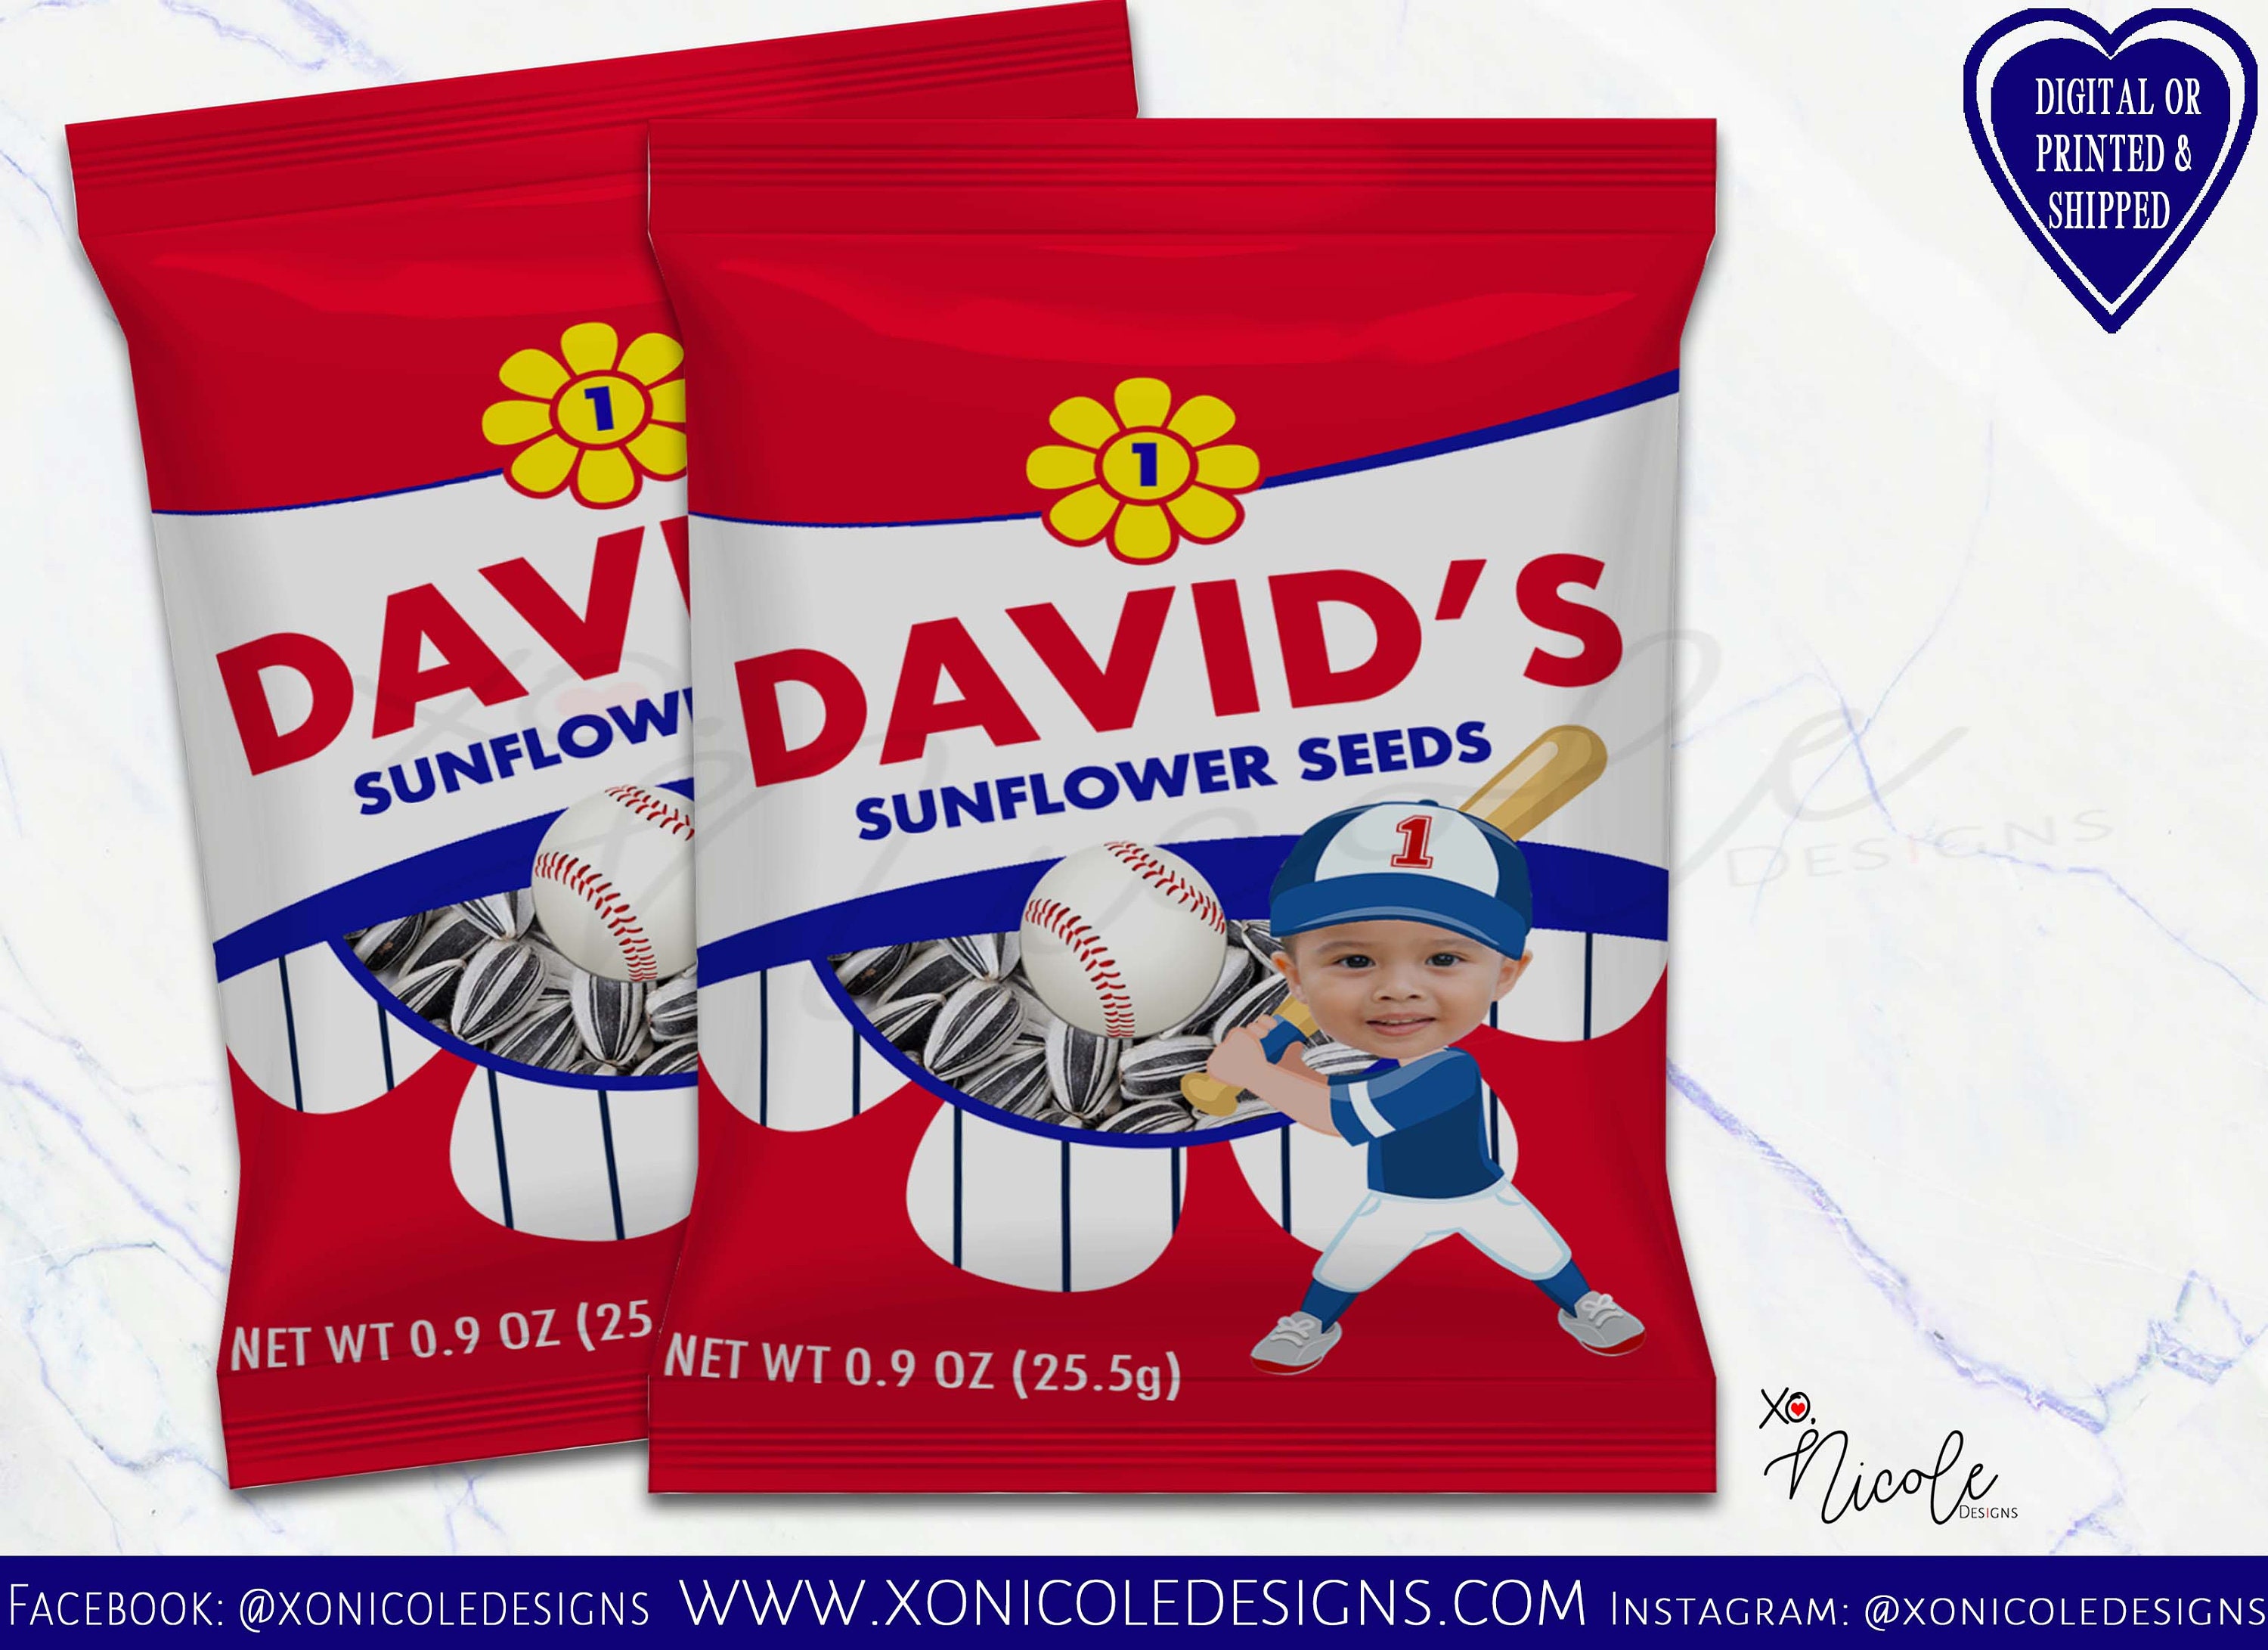 Sunflower plantable seed paper – Return to Sender